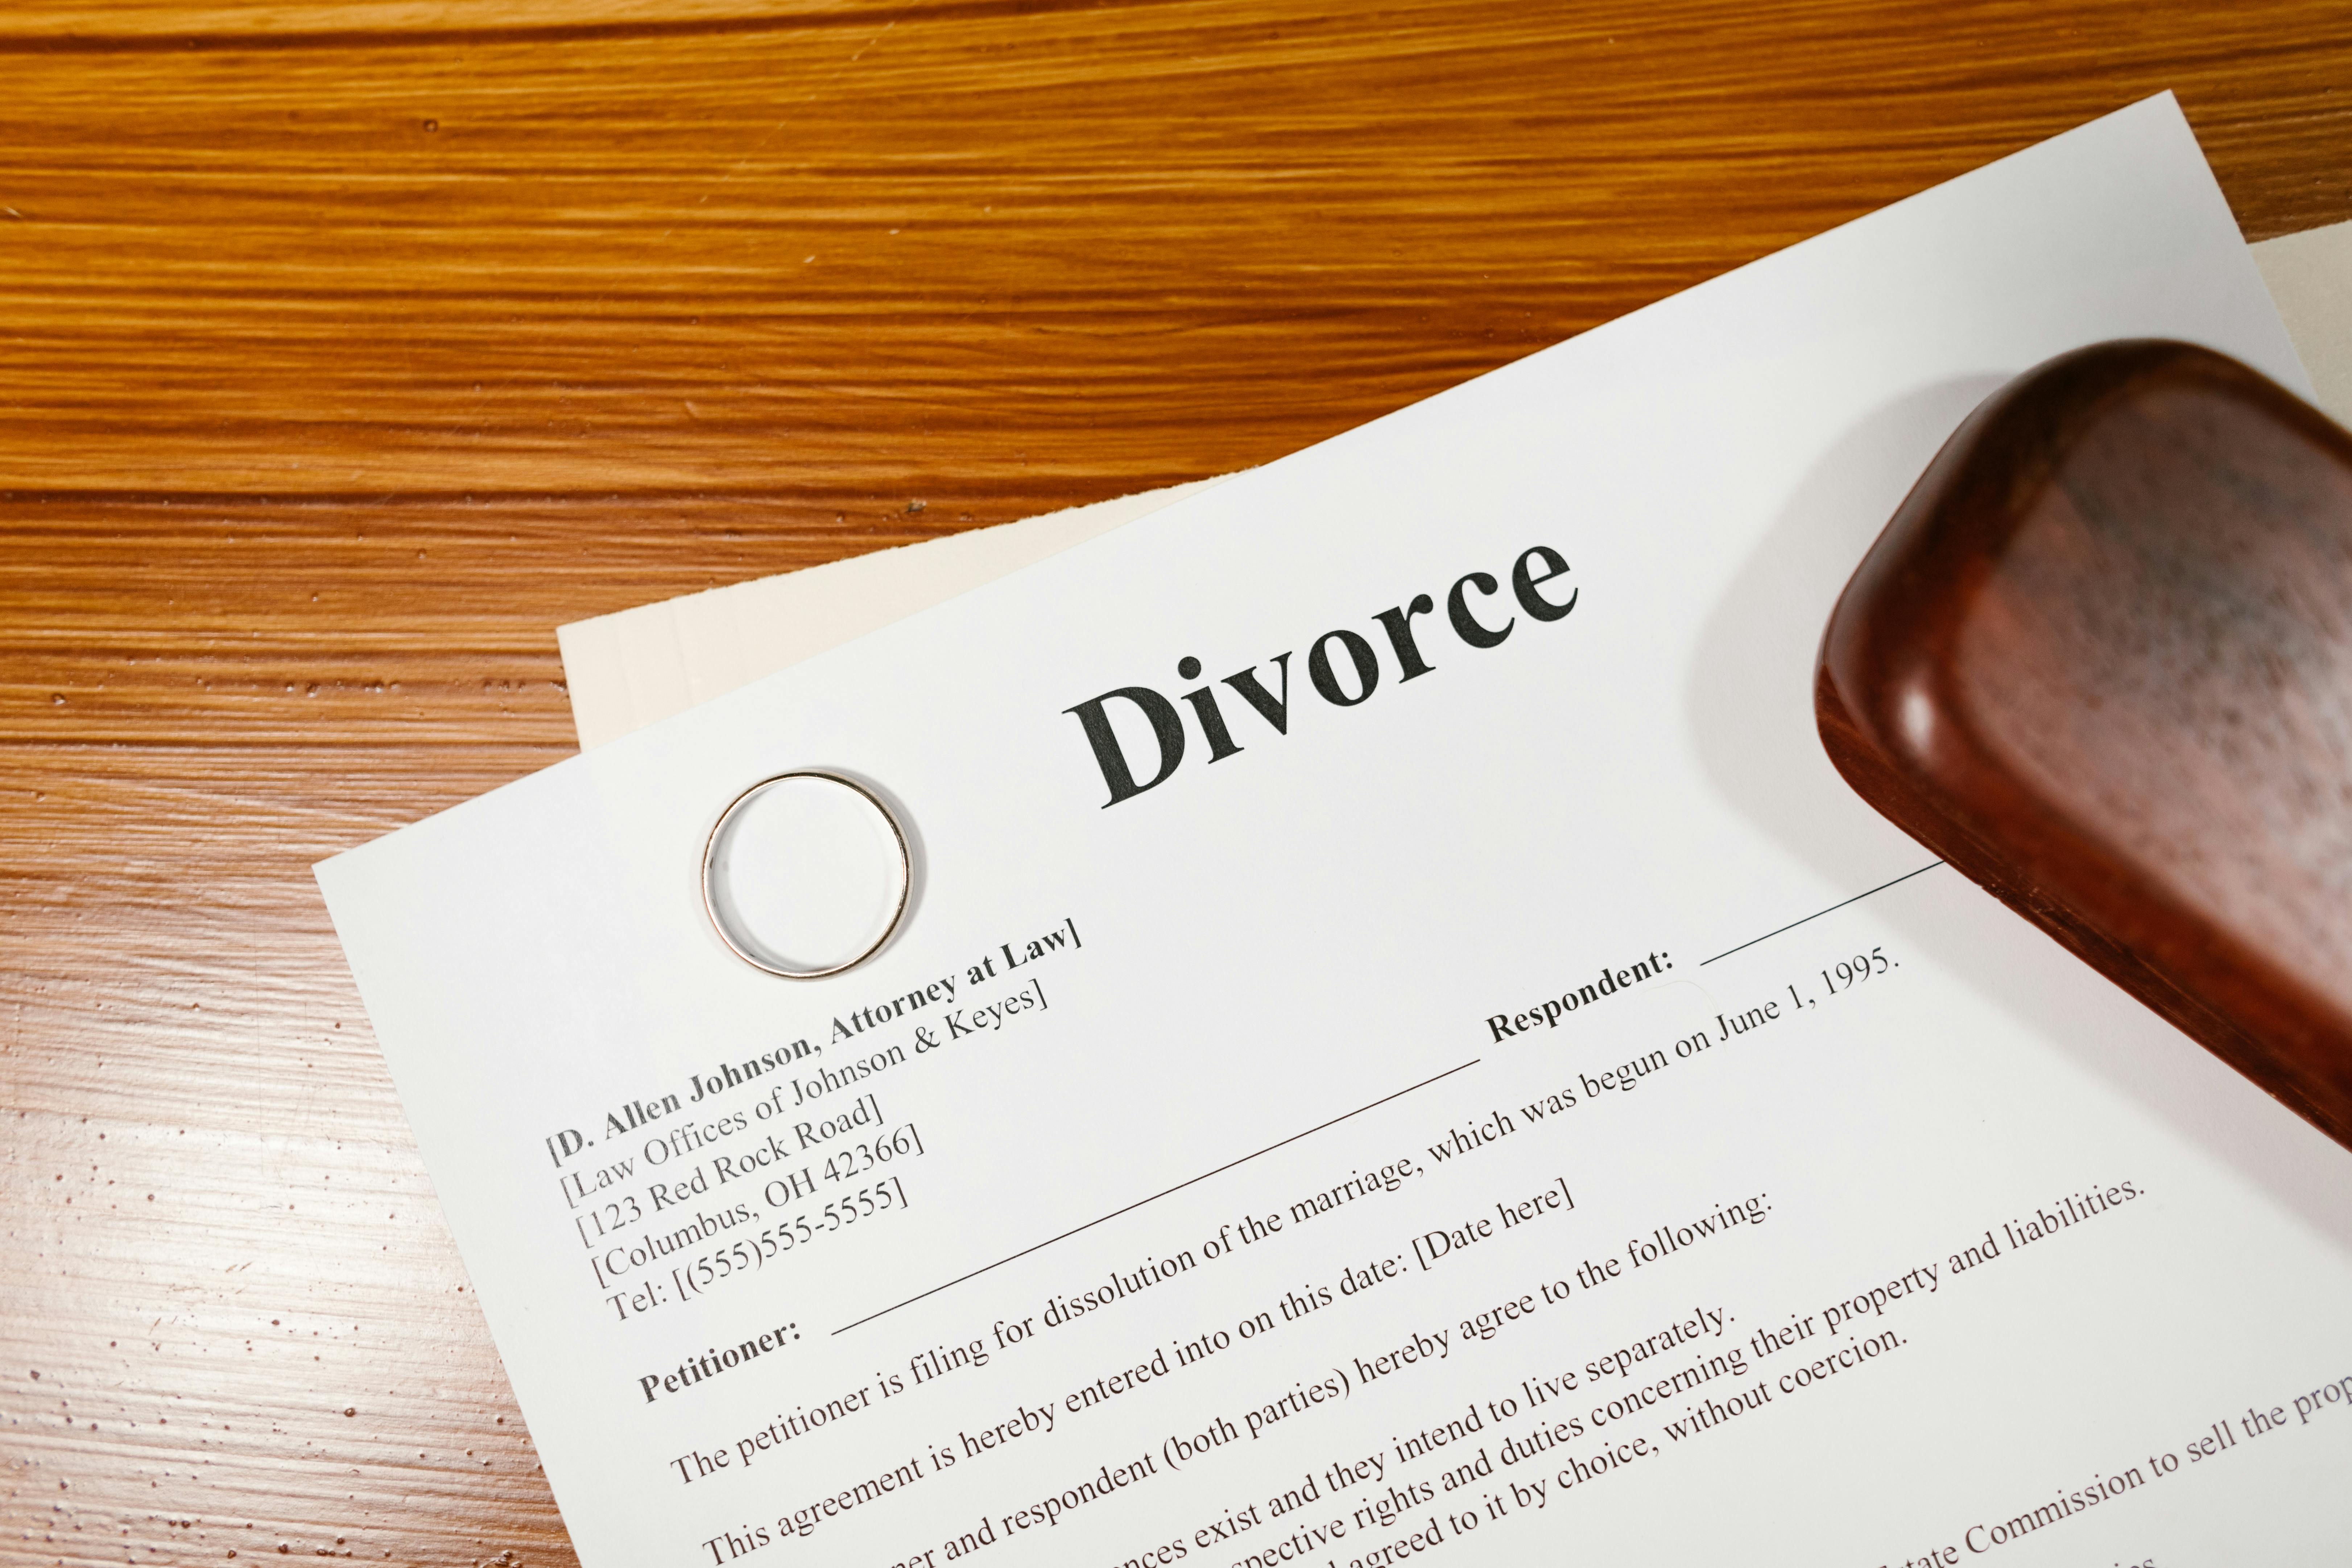 Divorce documentation. For illustration purposes only | Source: Pexels